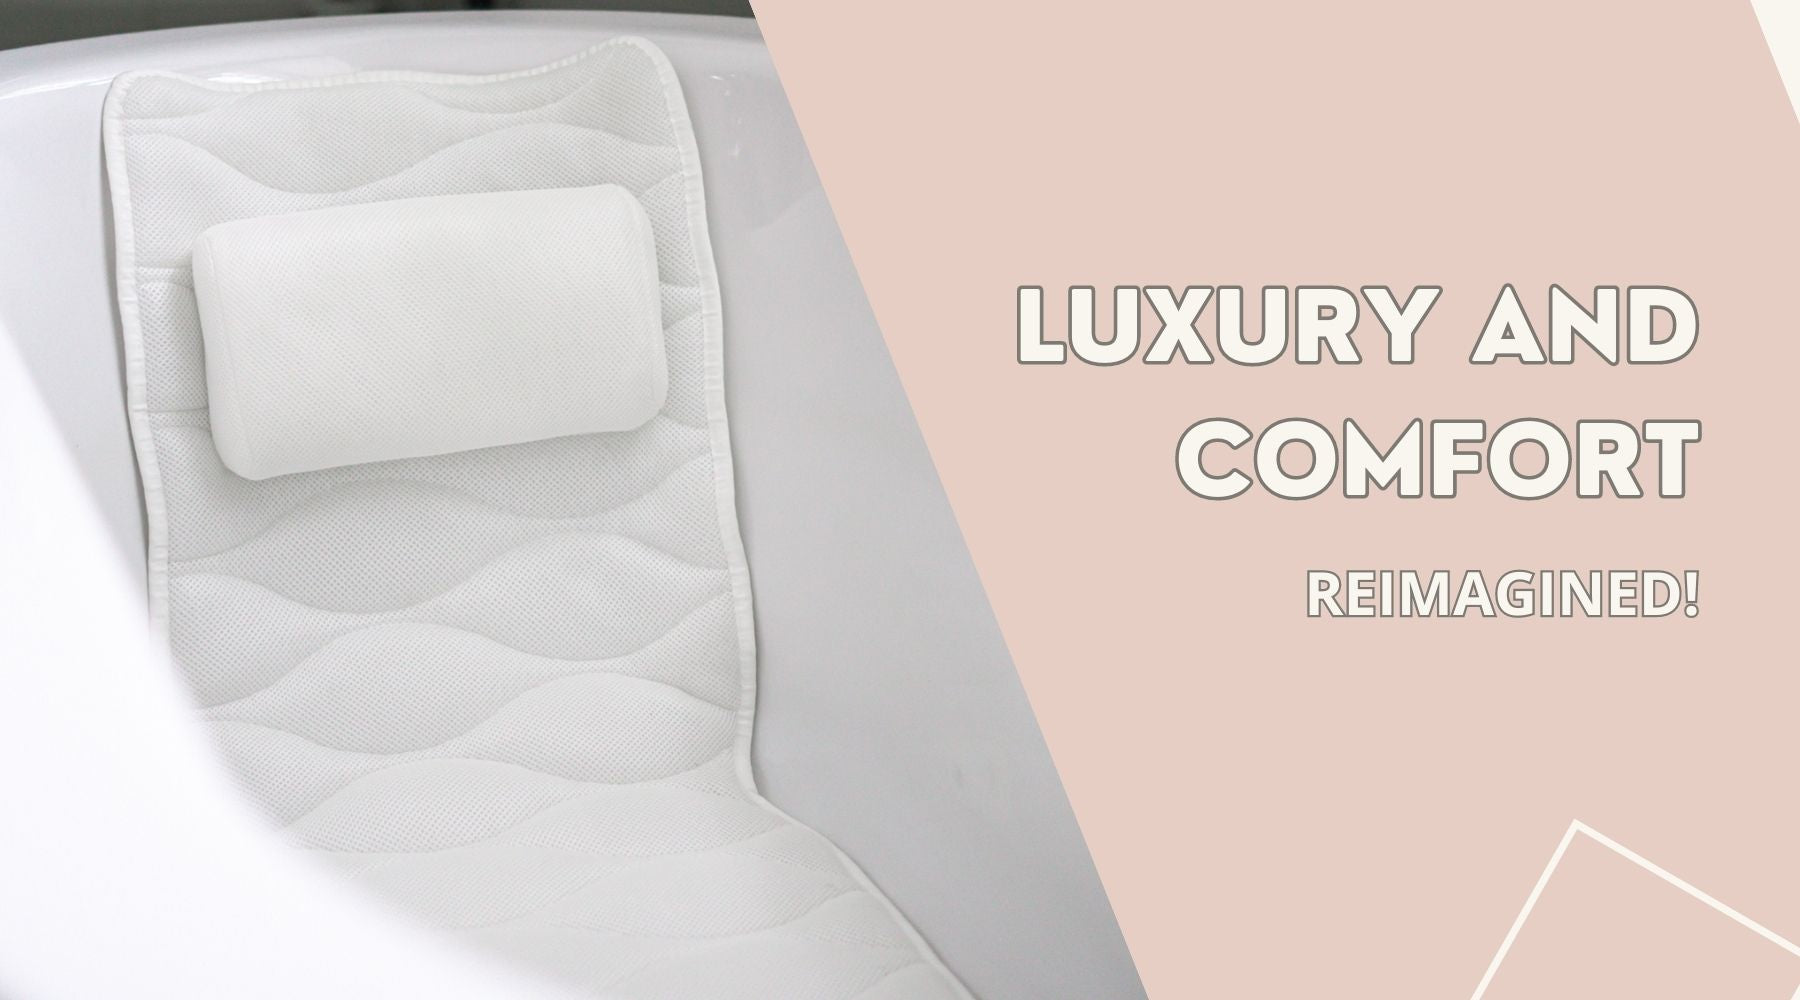 Full Body Bath Pillow for Spa-Like Comfort